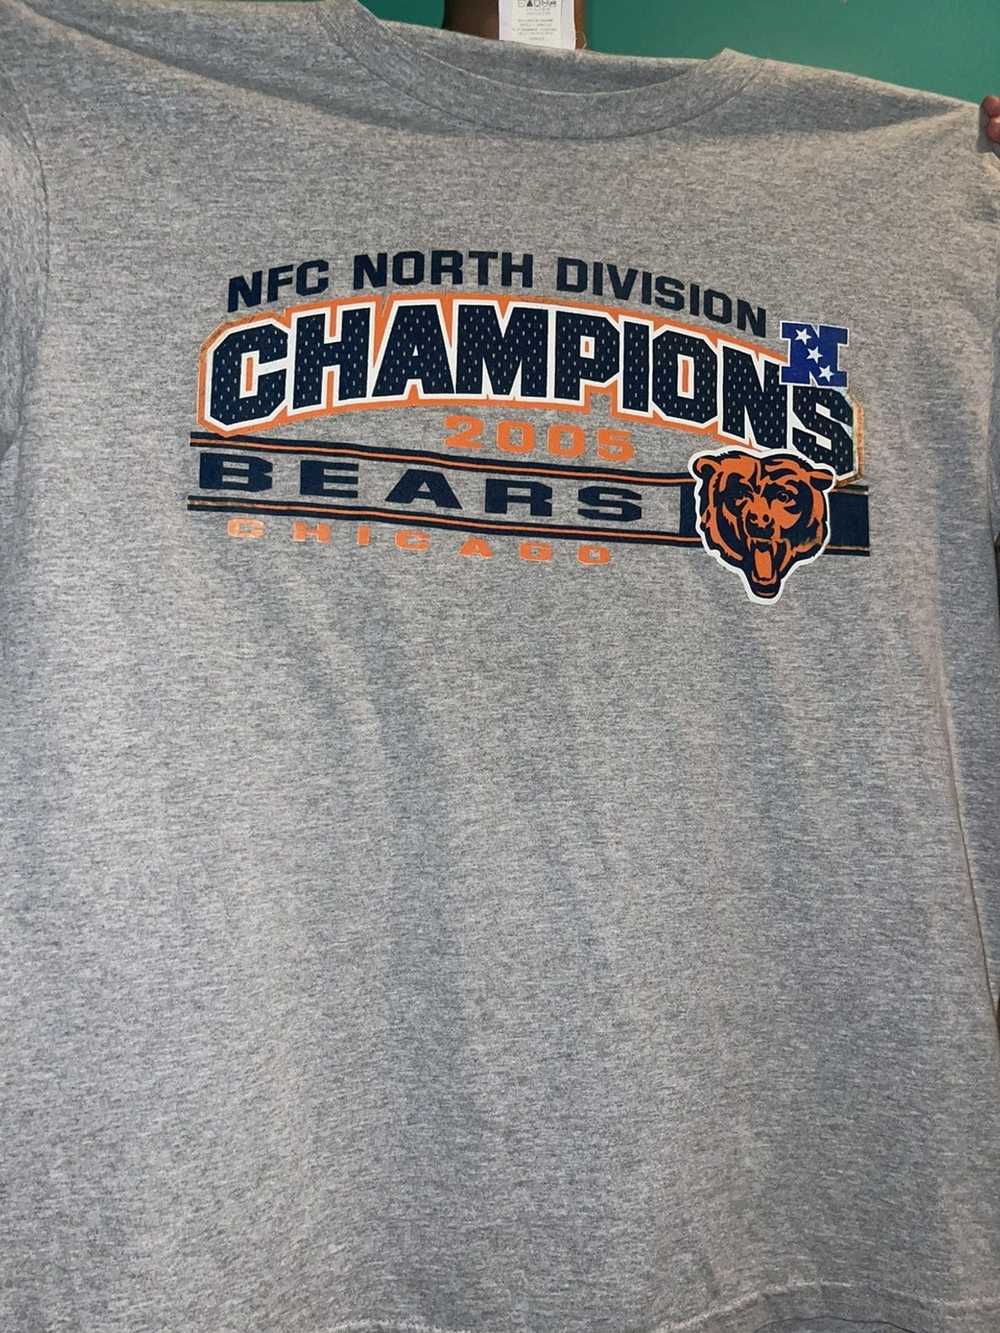 Nfc north division champion - Gem